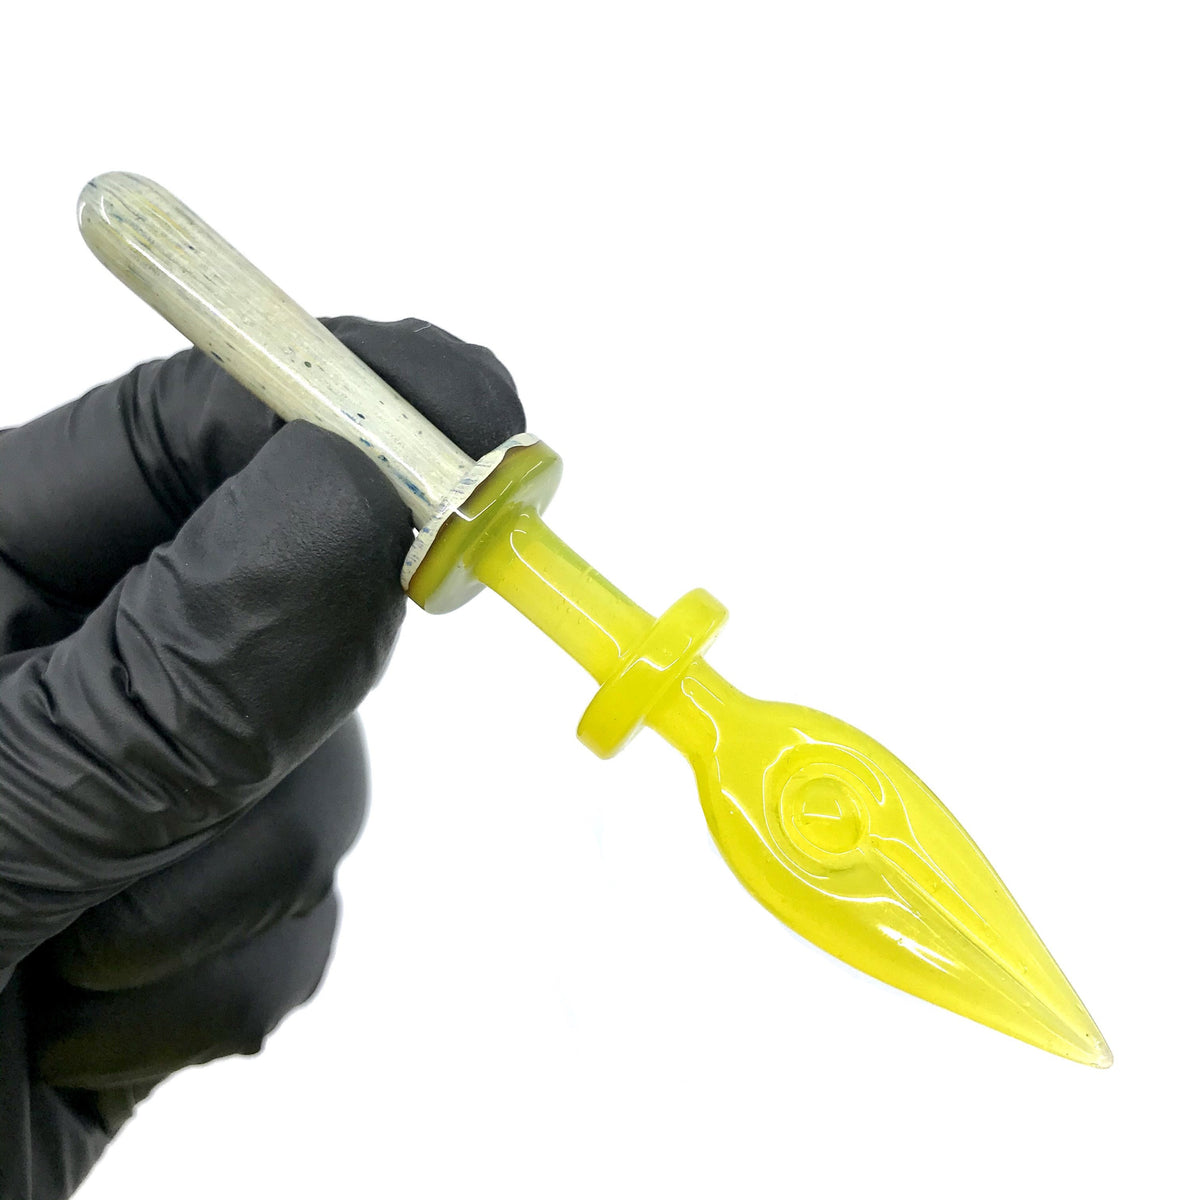 Creep Glass Spear Dabber Tool #1